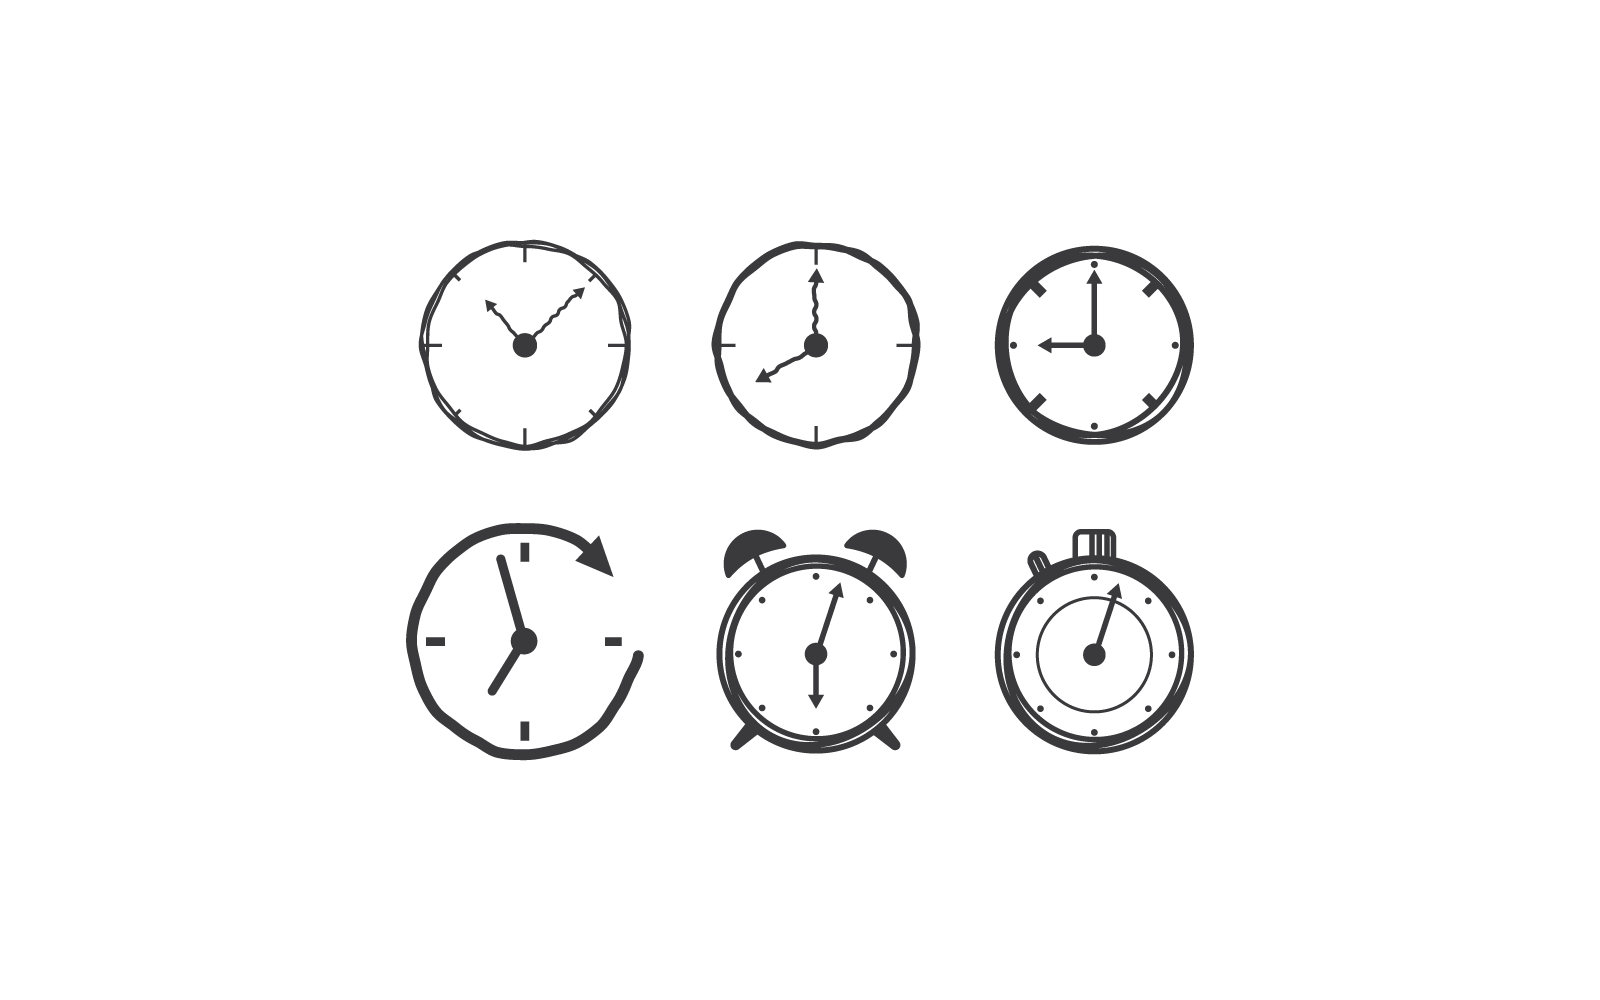 O Clock illustration vector flat design